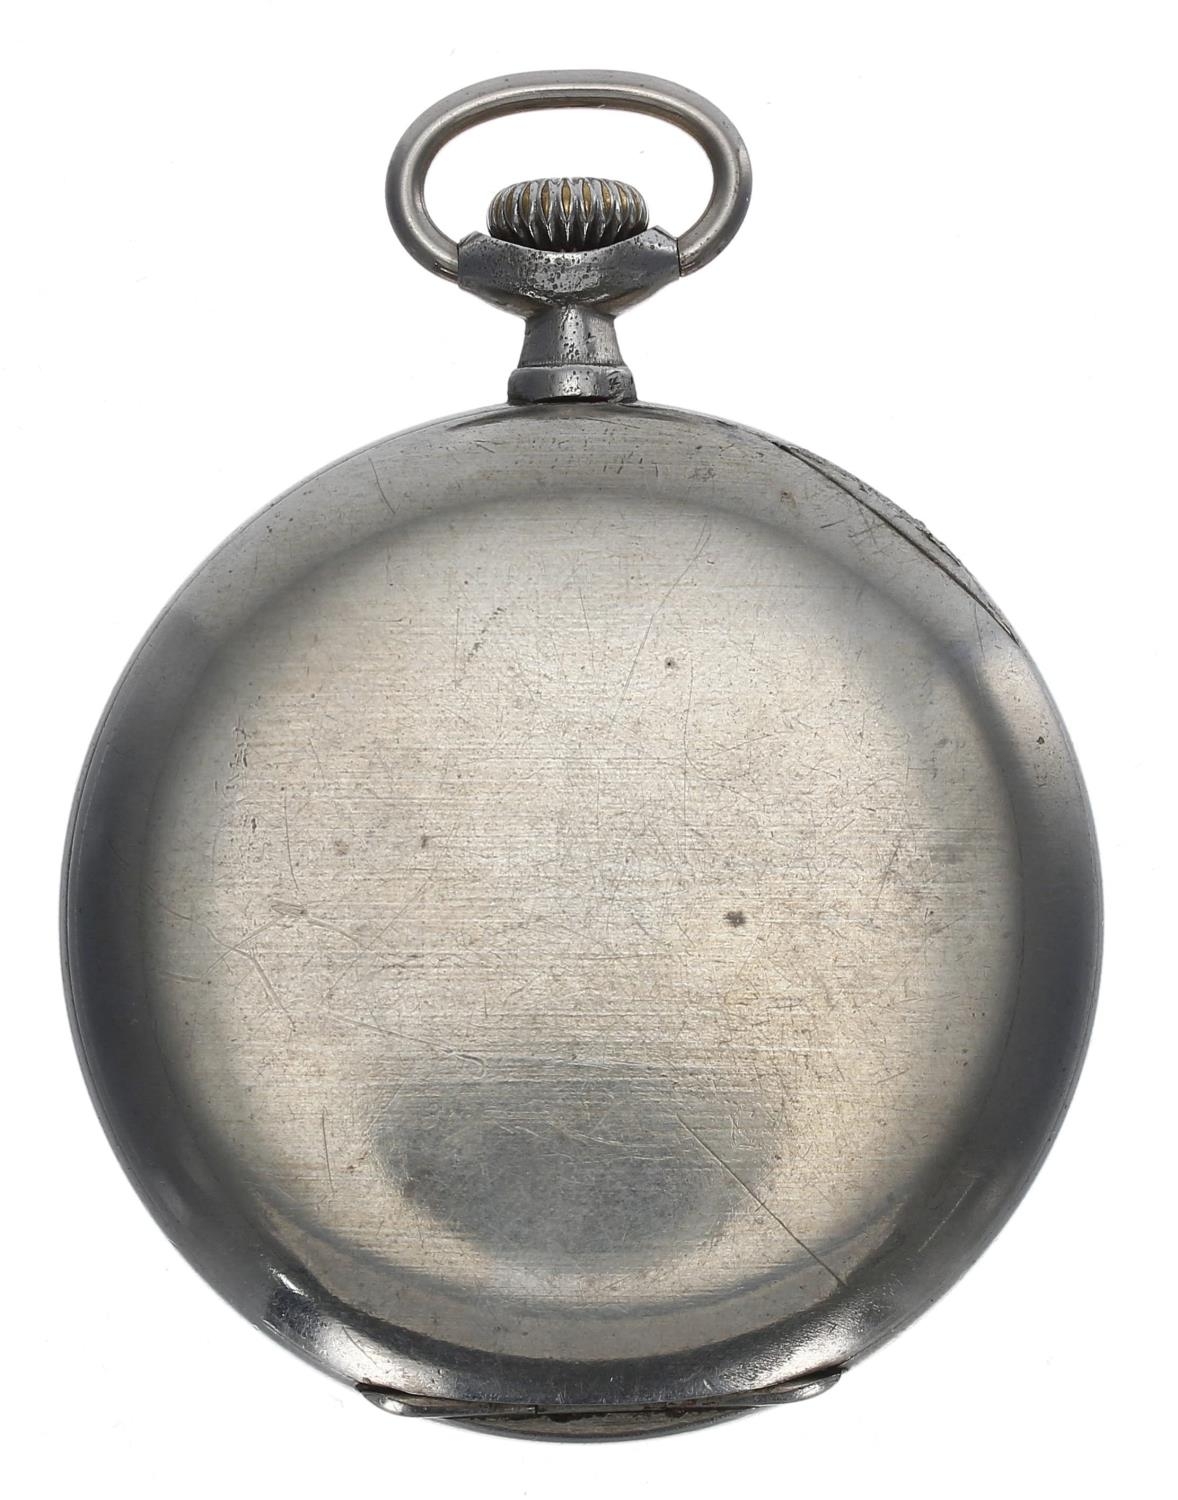 Omega - nickel cased lever pocket watch, case no. 6905179, serial no. 7671xxx, circa 1930's, - Image 4 of 4